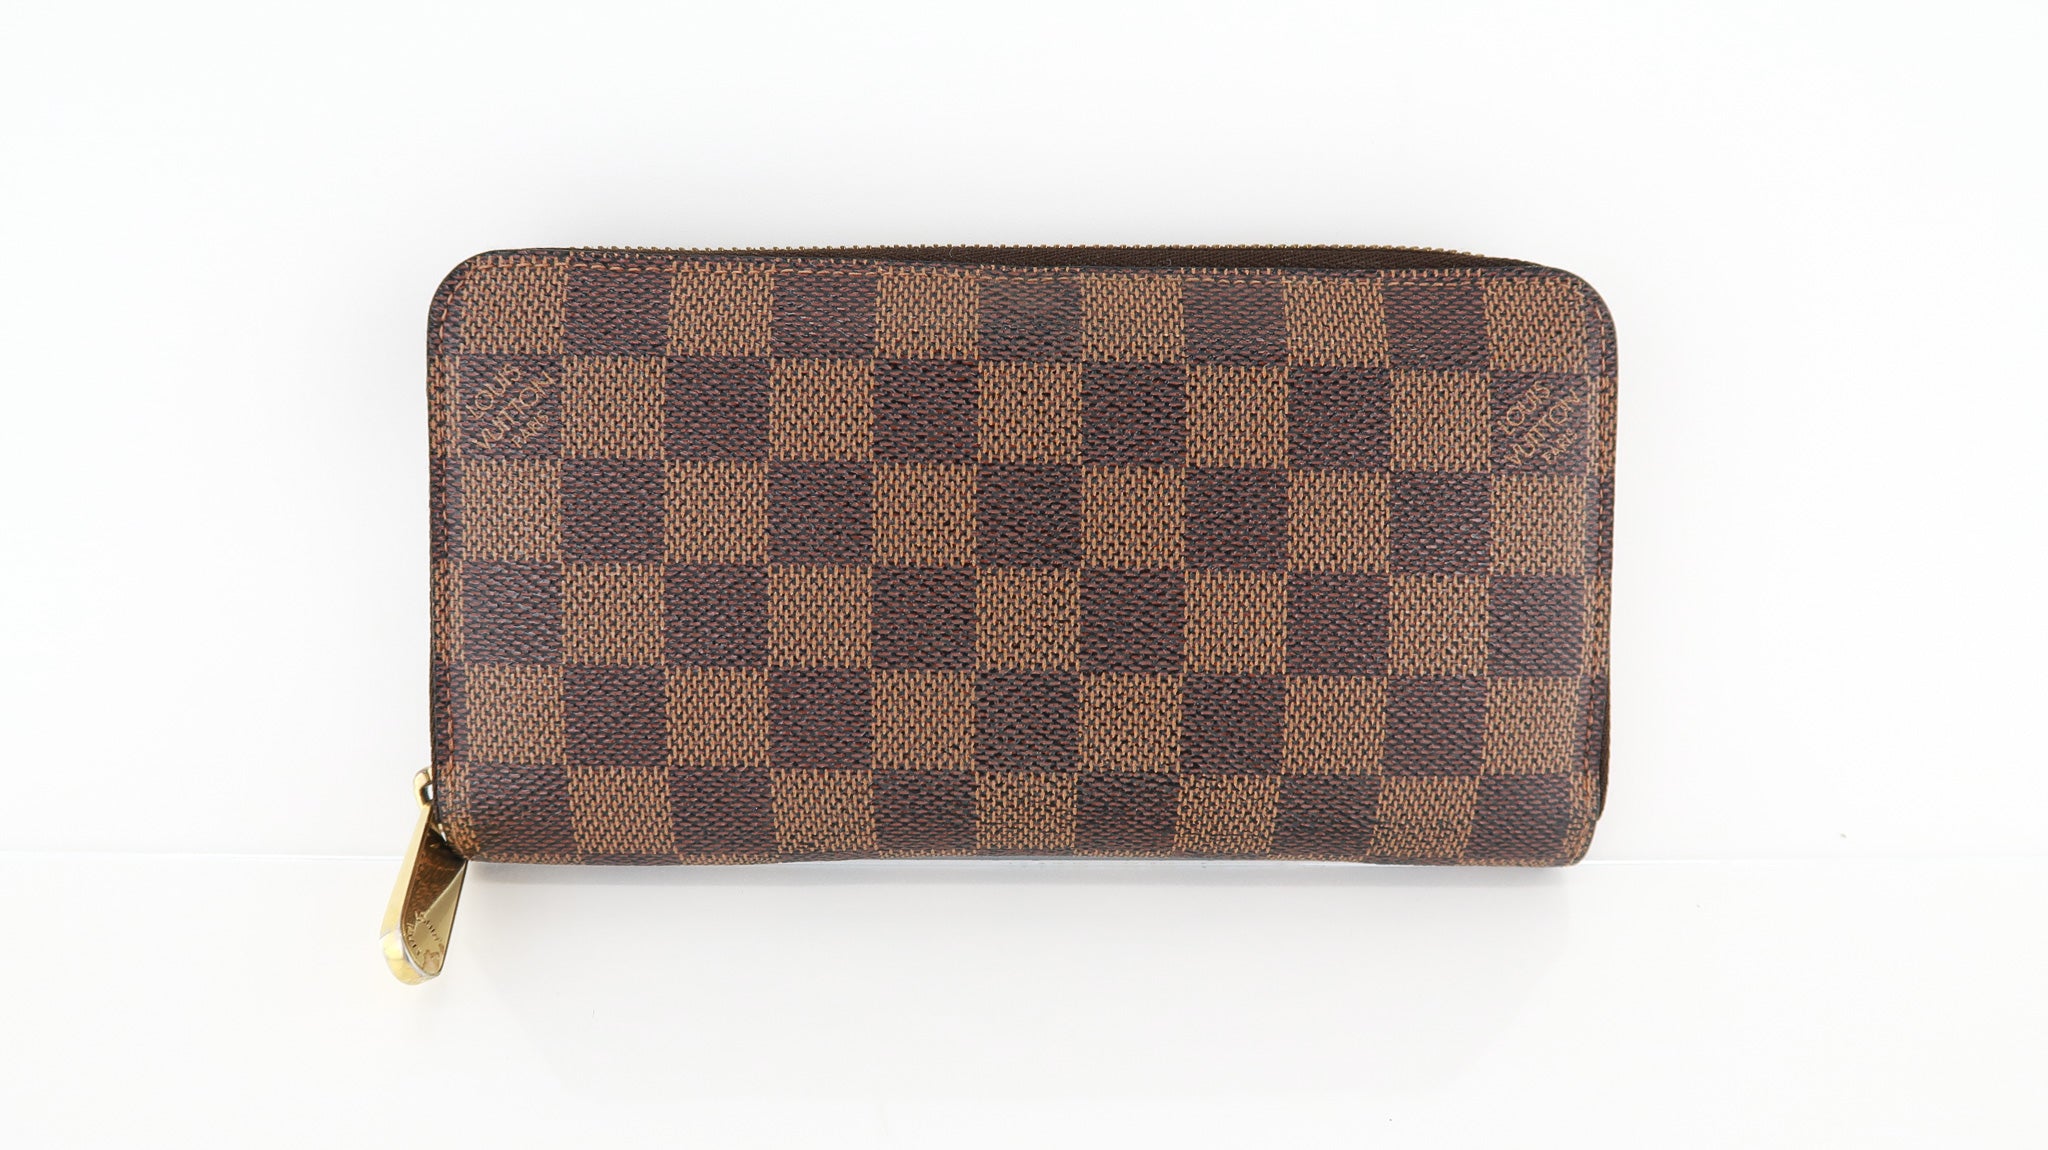 Authentic Louis Vuitton Damier Azur full size zip around wallet on